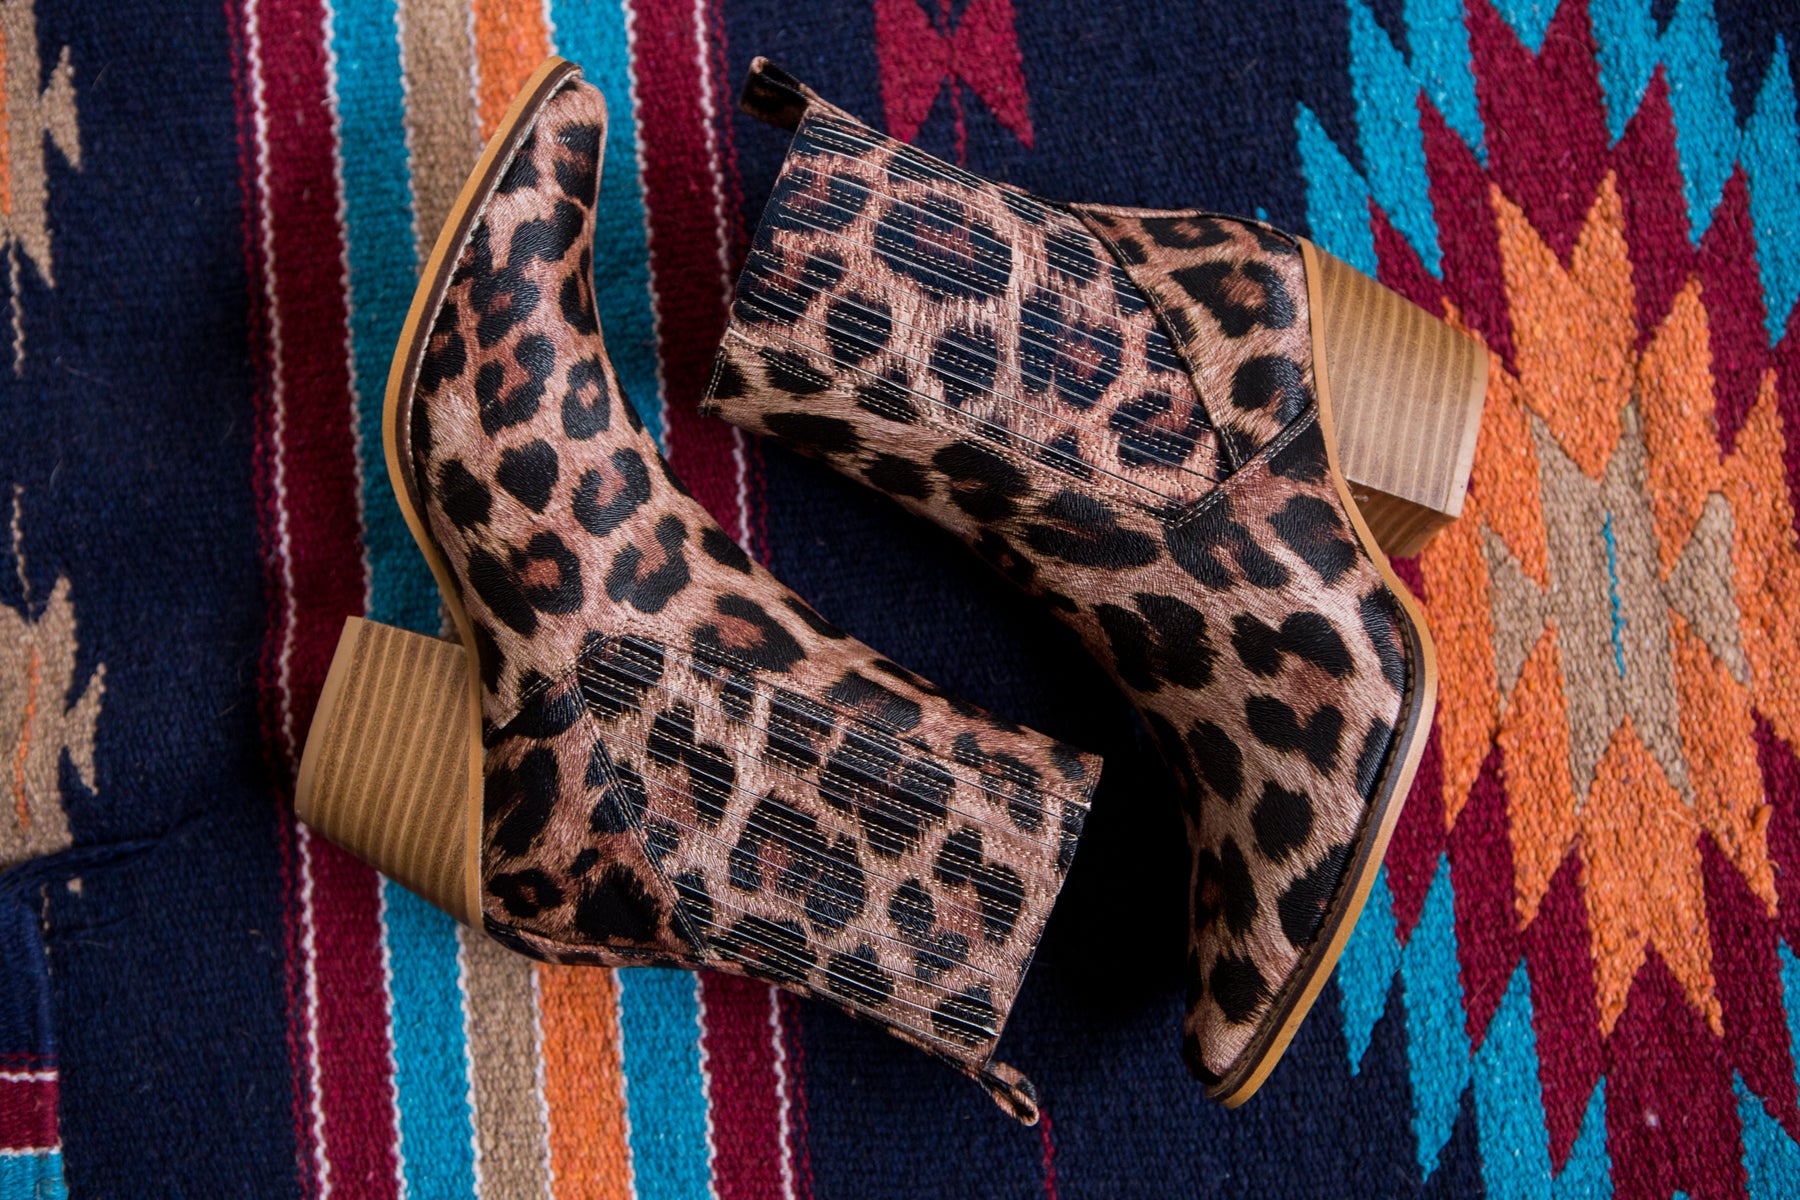 Leopard Print Beatle Boots - The Glamorous Gleam